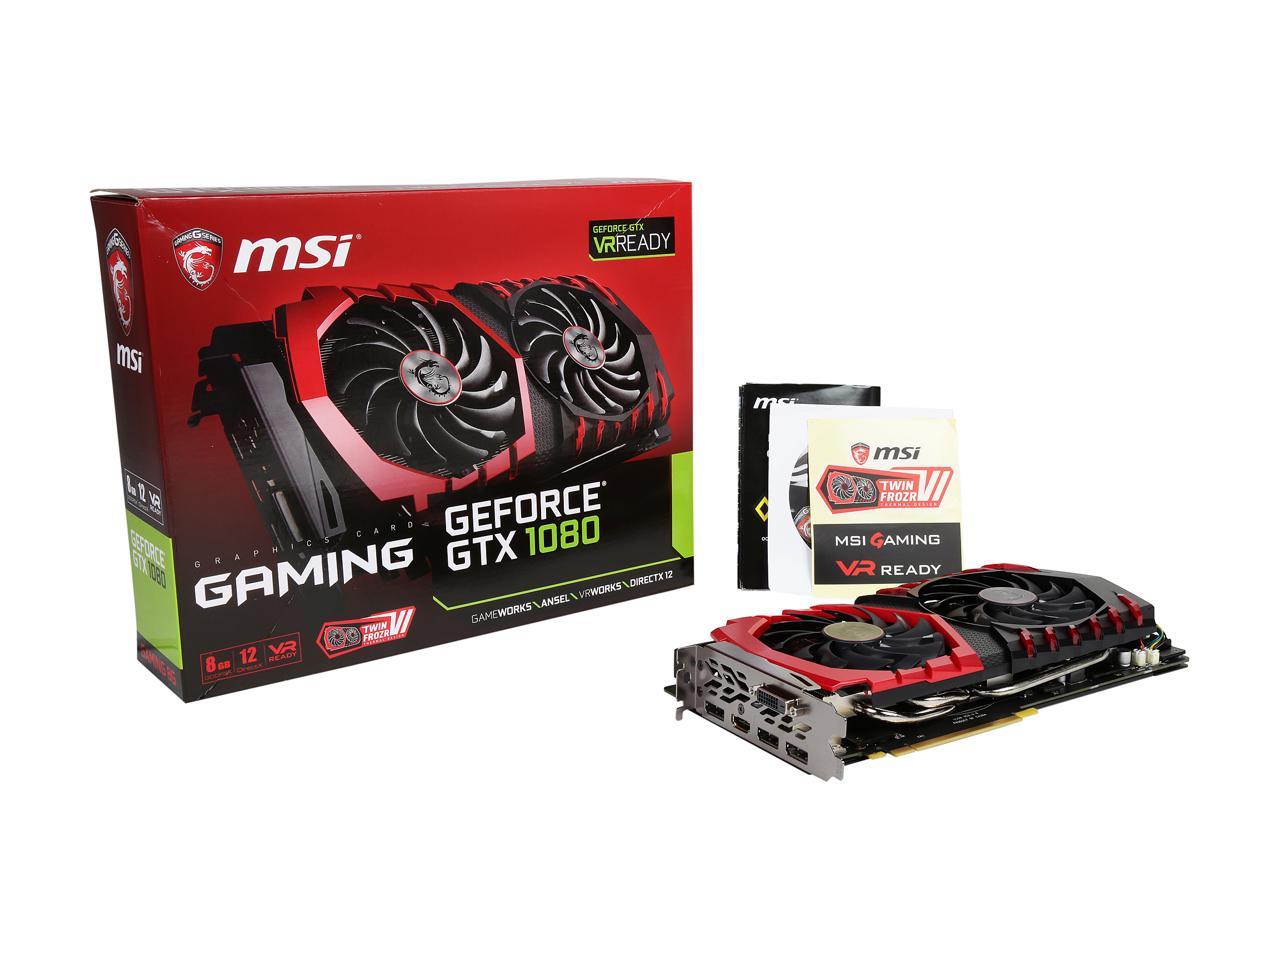 MSI GeForce GTX 1080 Video Card GTX 1080 GAMING 8G - Newegg.com